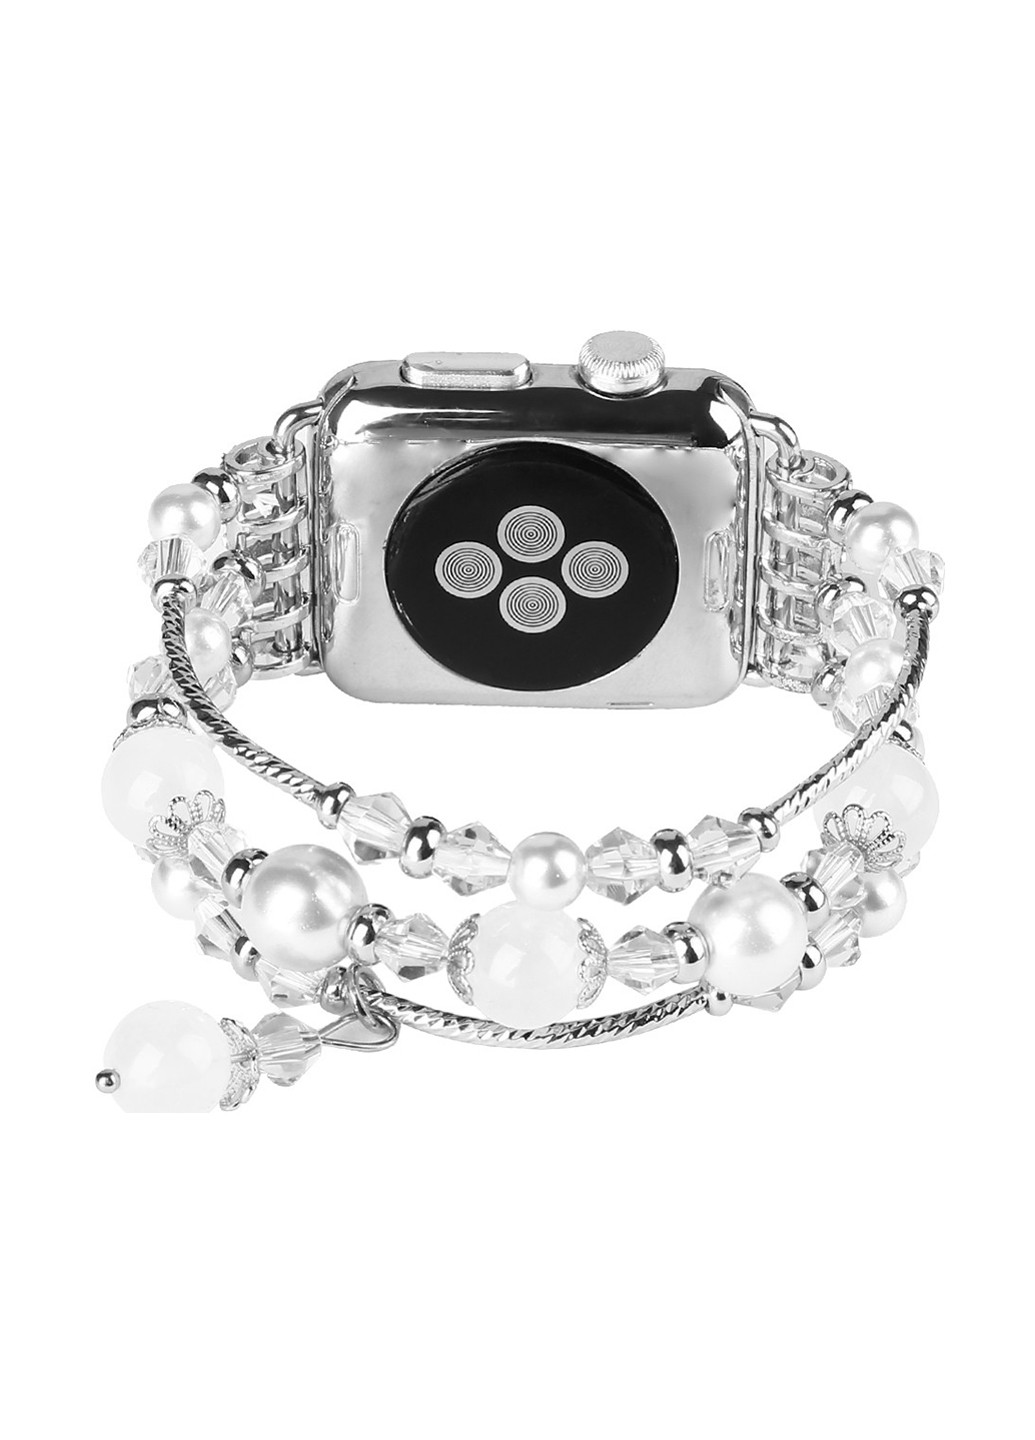 Ремешок для часов Apple Watch Bracelet Crystal 38/40mm Silver XoKo ремешок для часов apple watch xoko bracelet crystal 38/40mm silver (143704636)